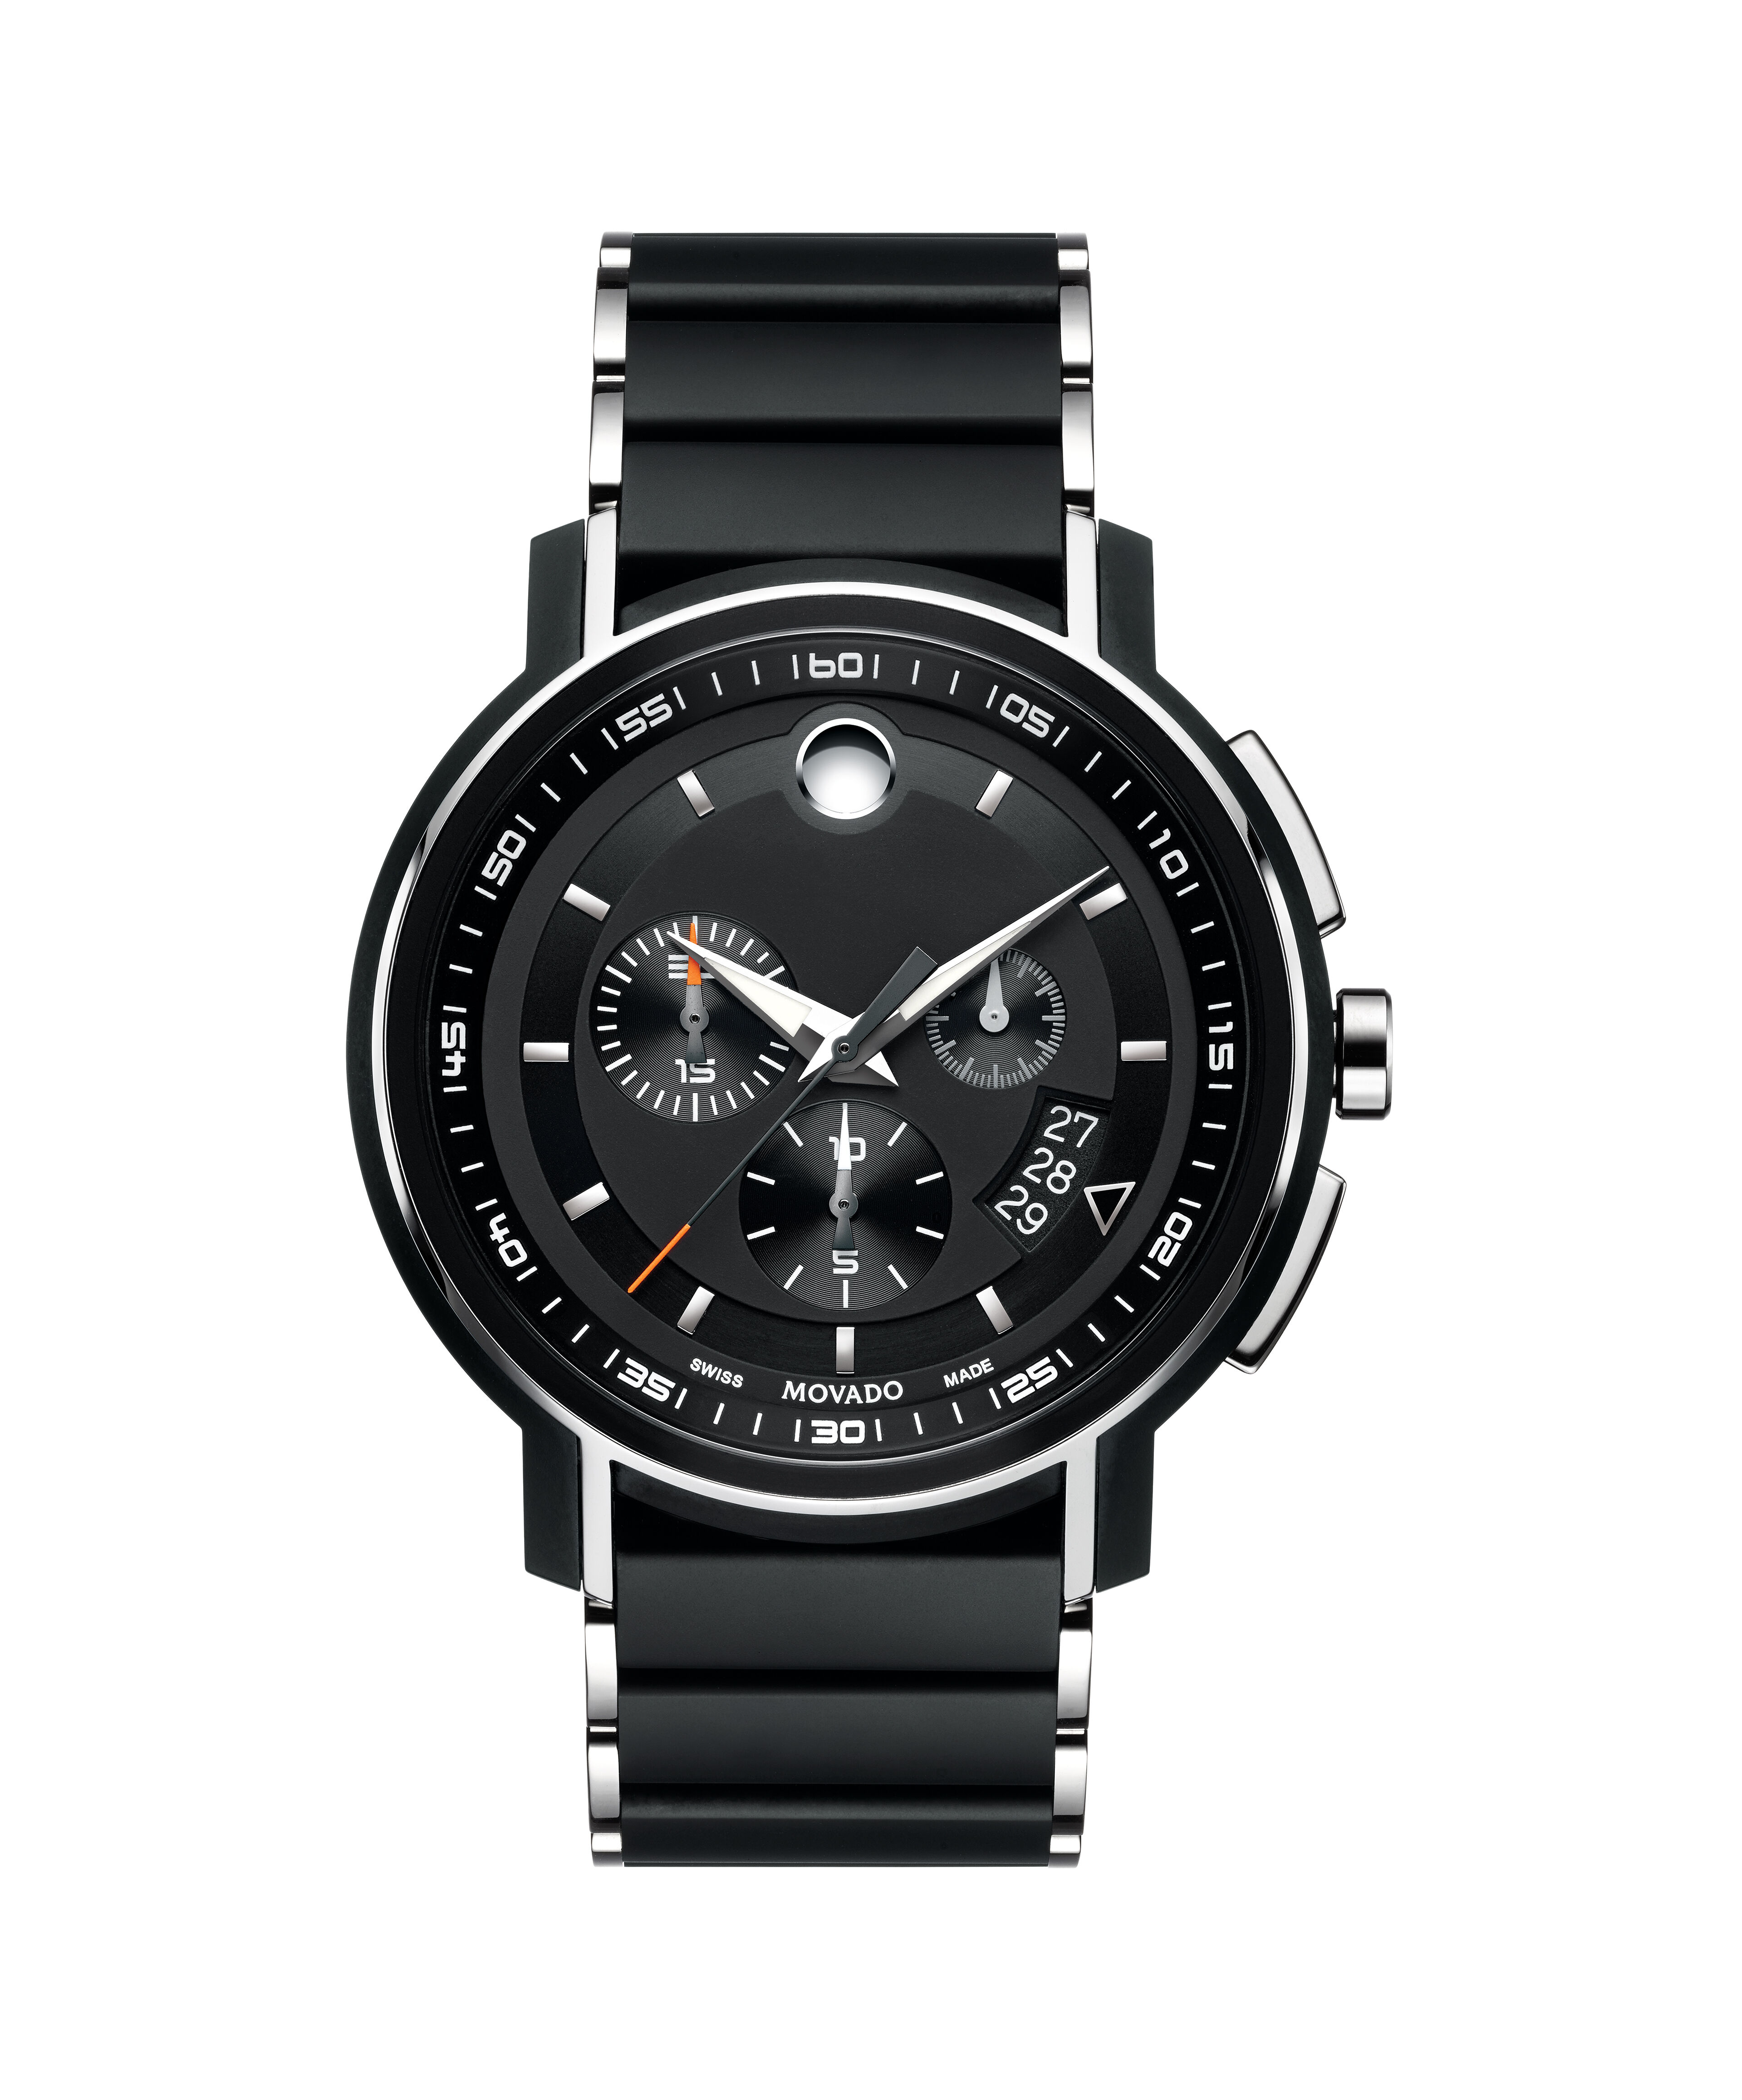 Porsche Replikas Watches